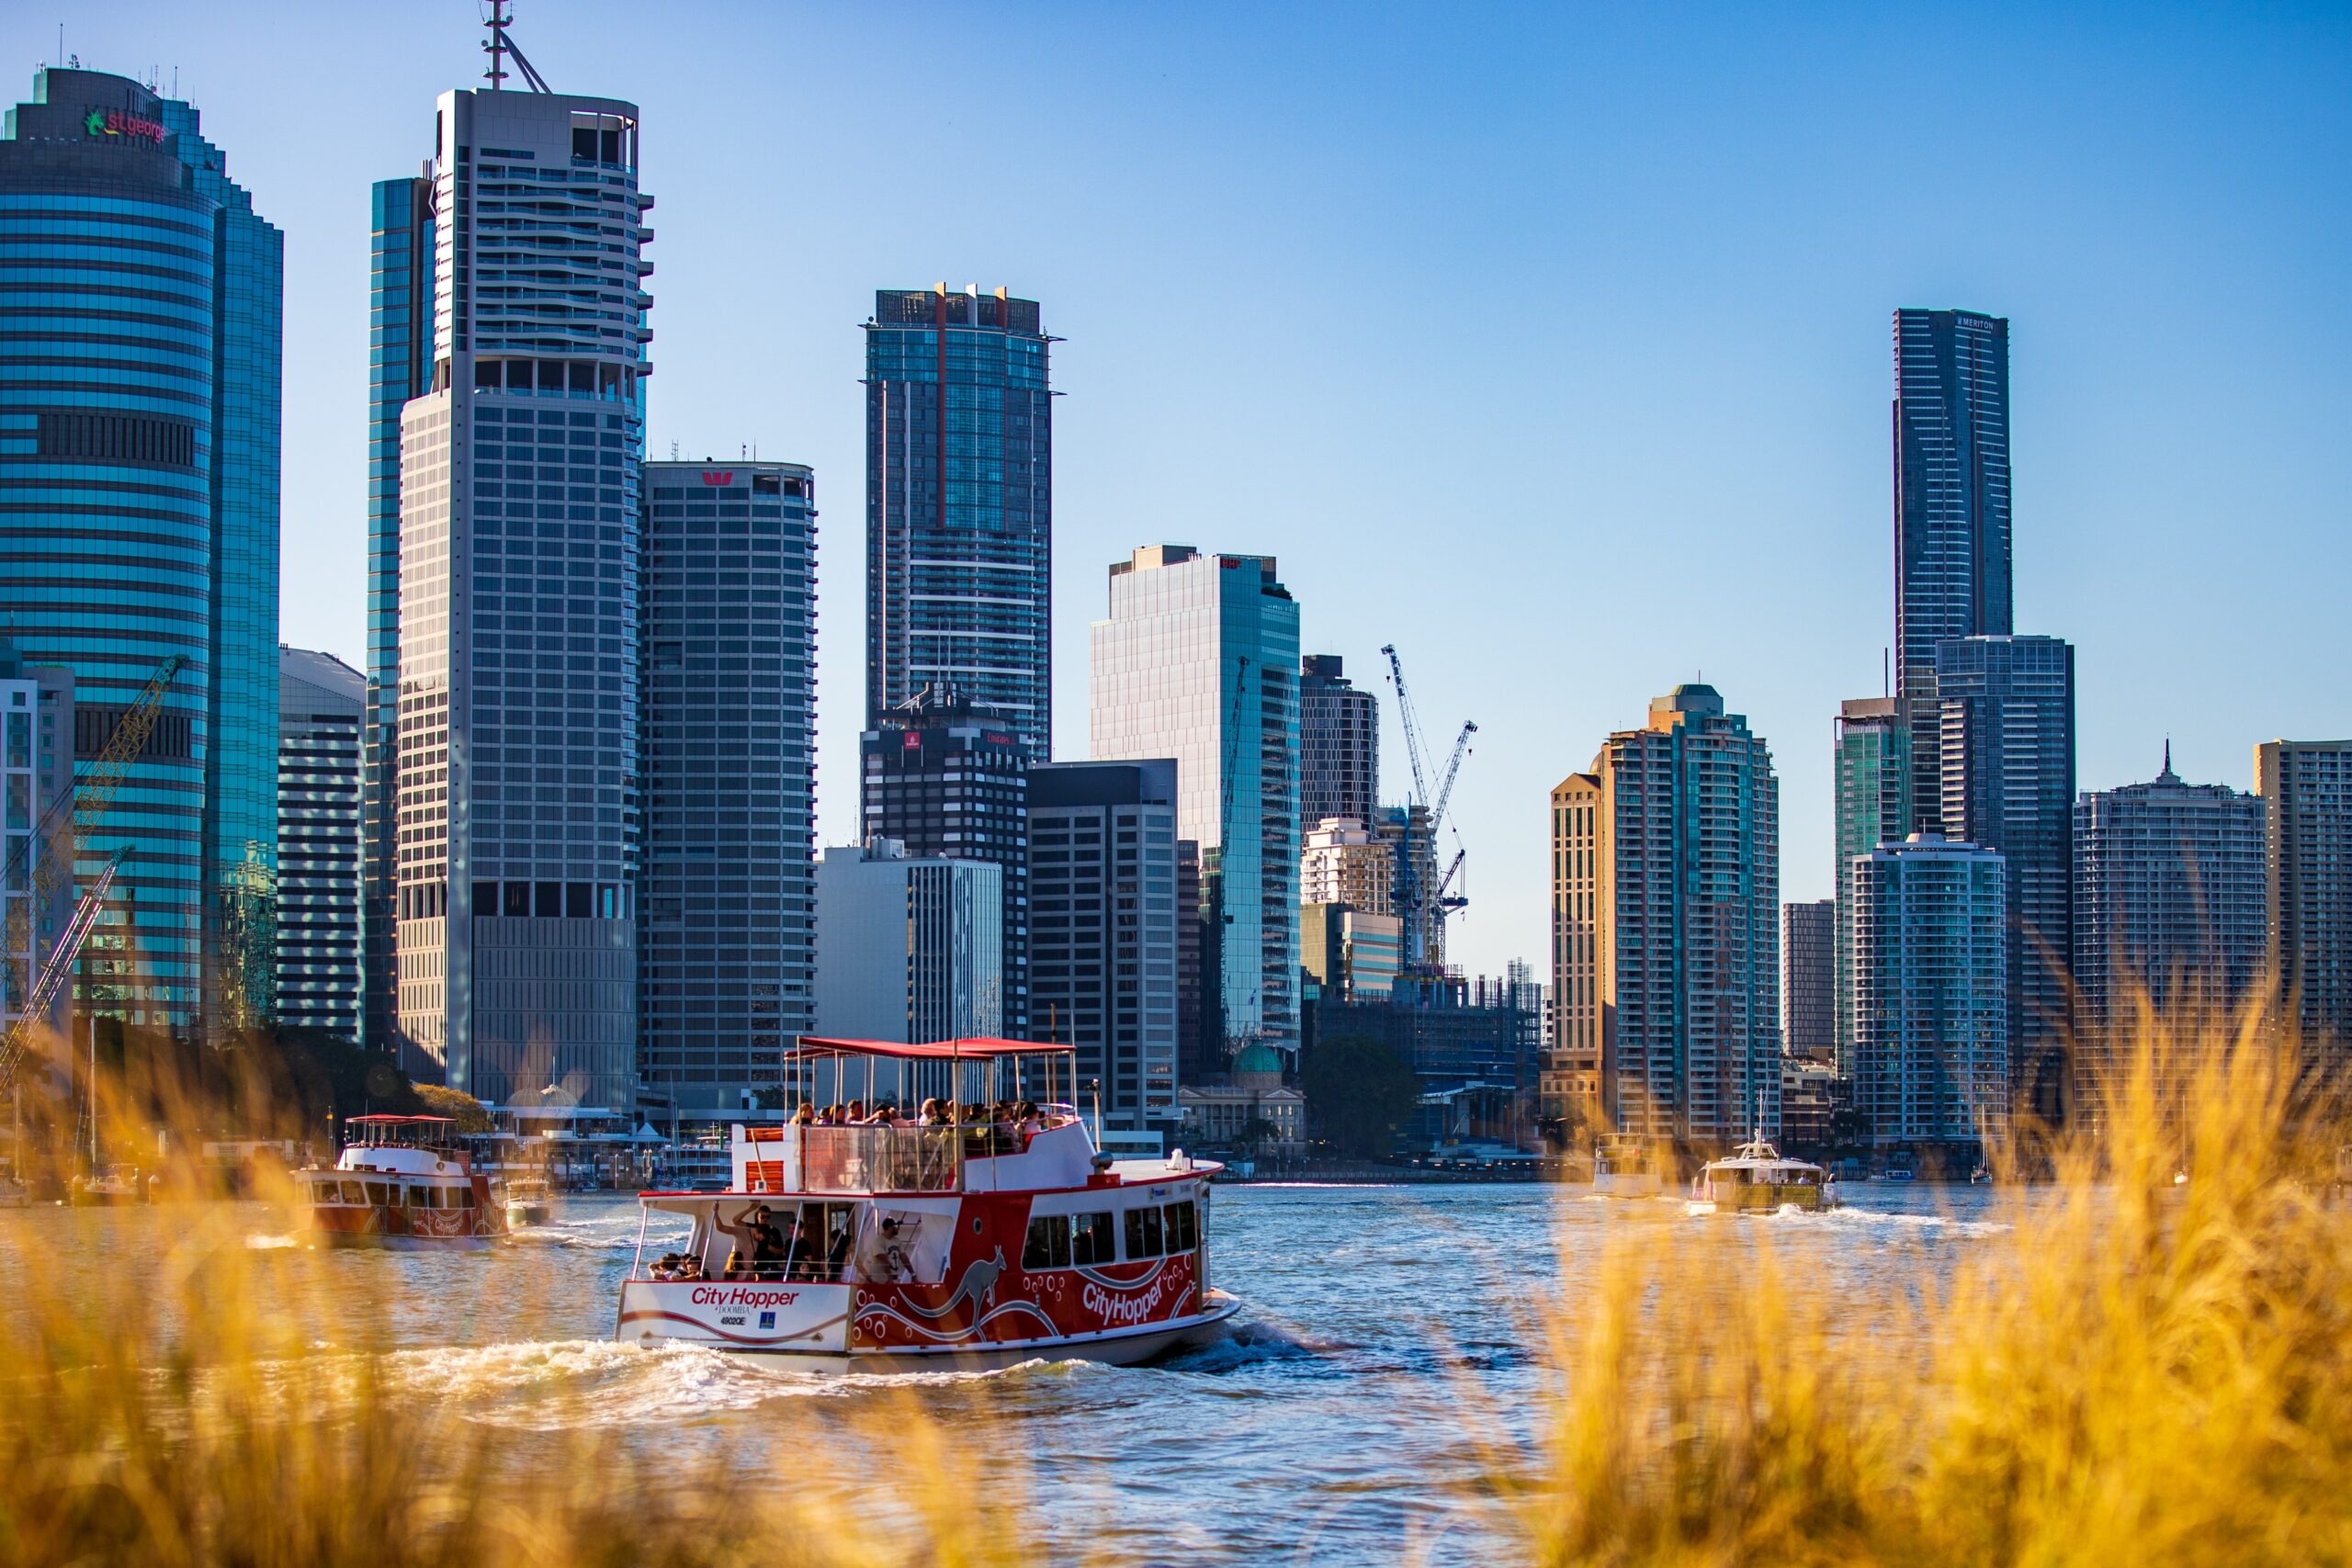 Brisbane river and city skyline